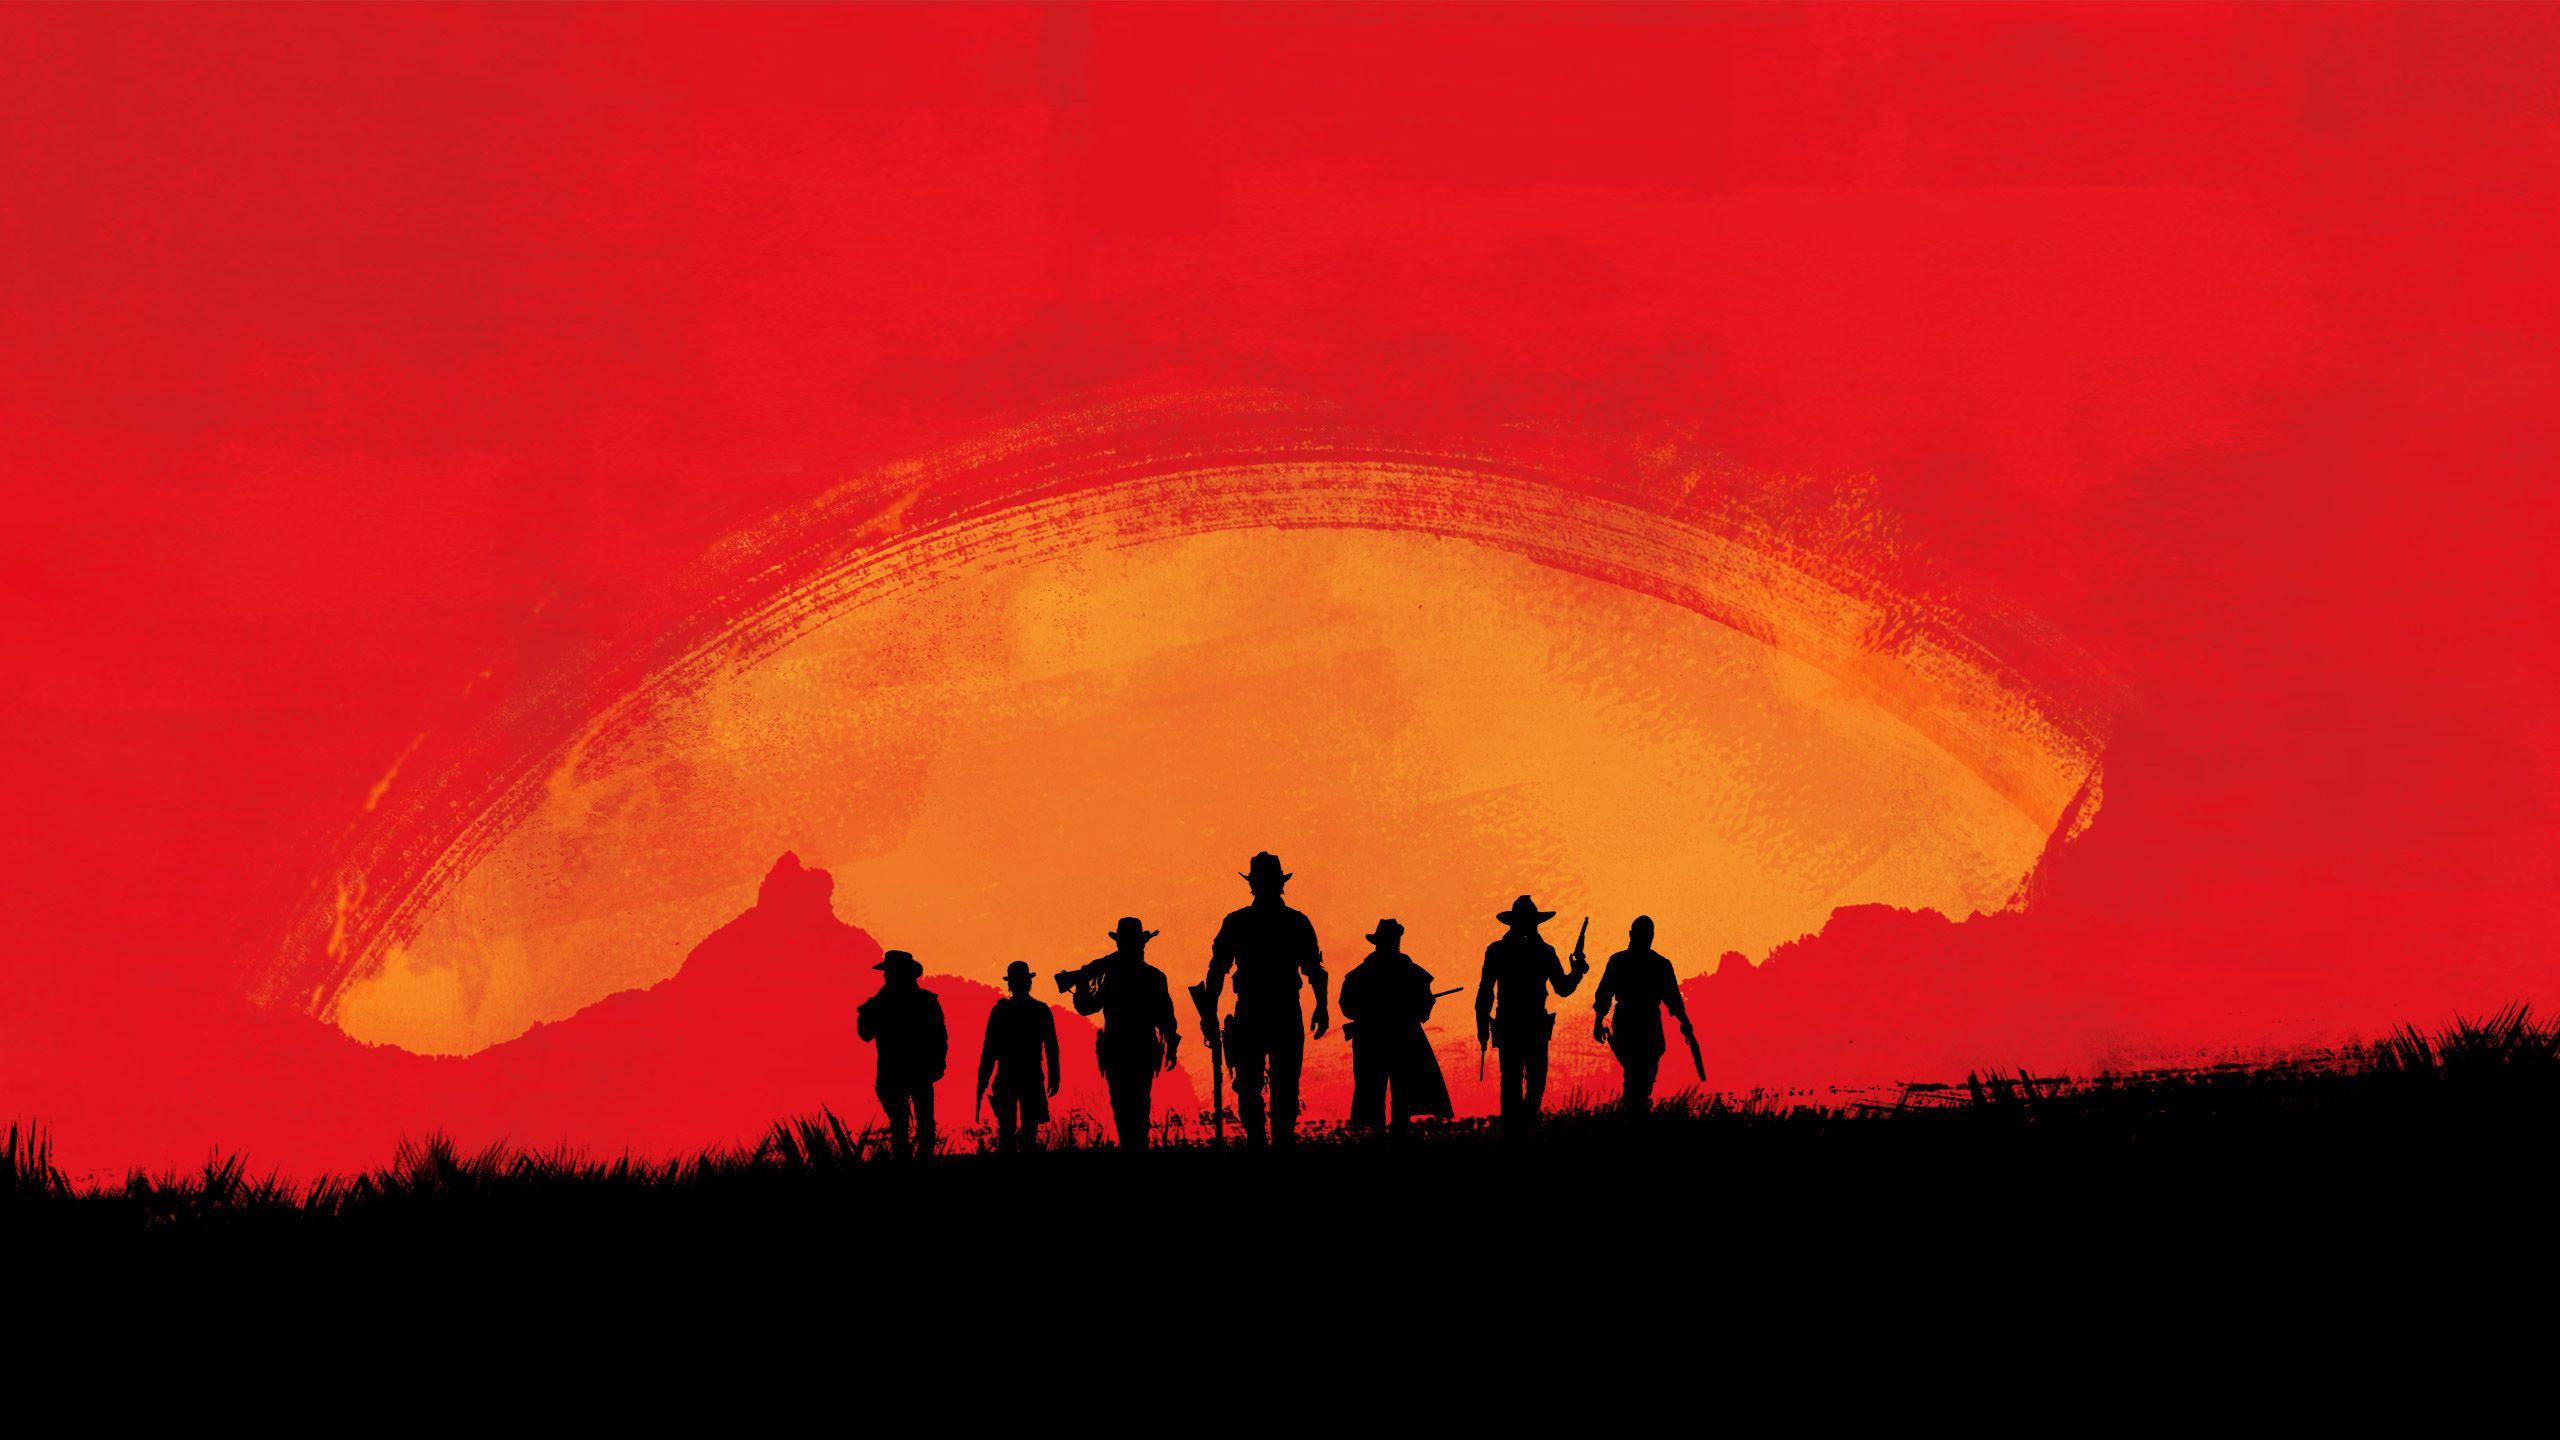 Red Dead Redemption 2 Wallpaper Free Red Dead Redemption 2 Background